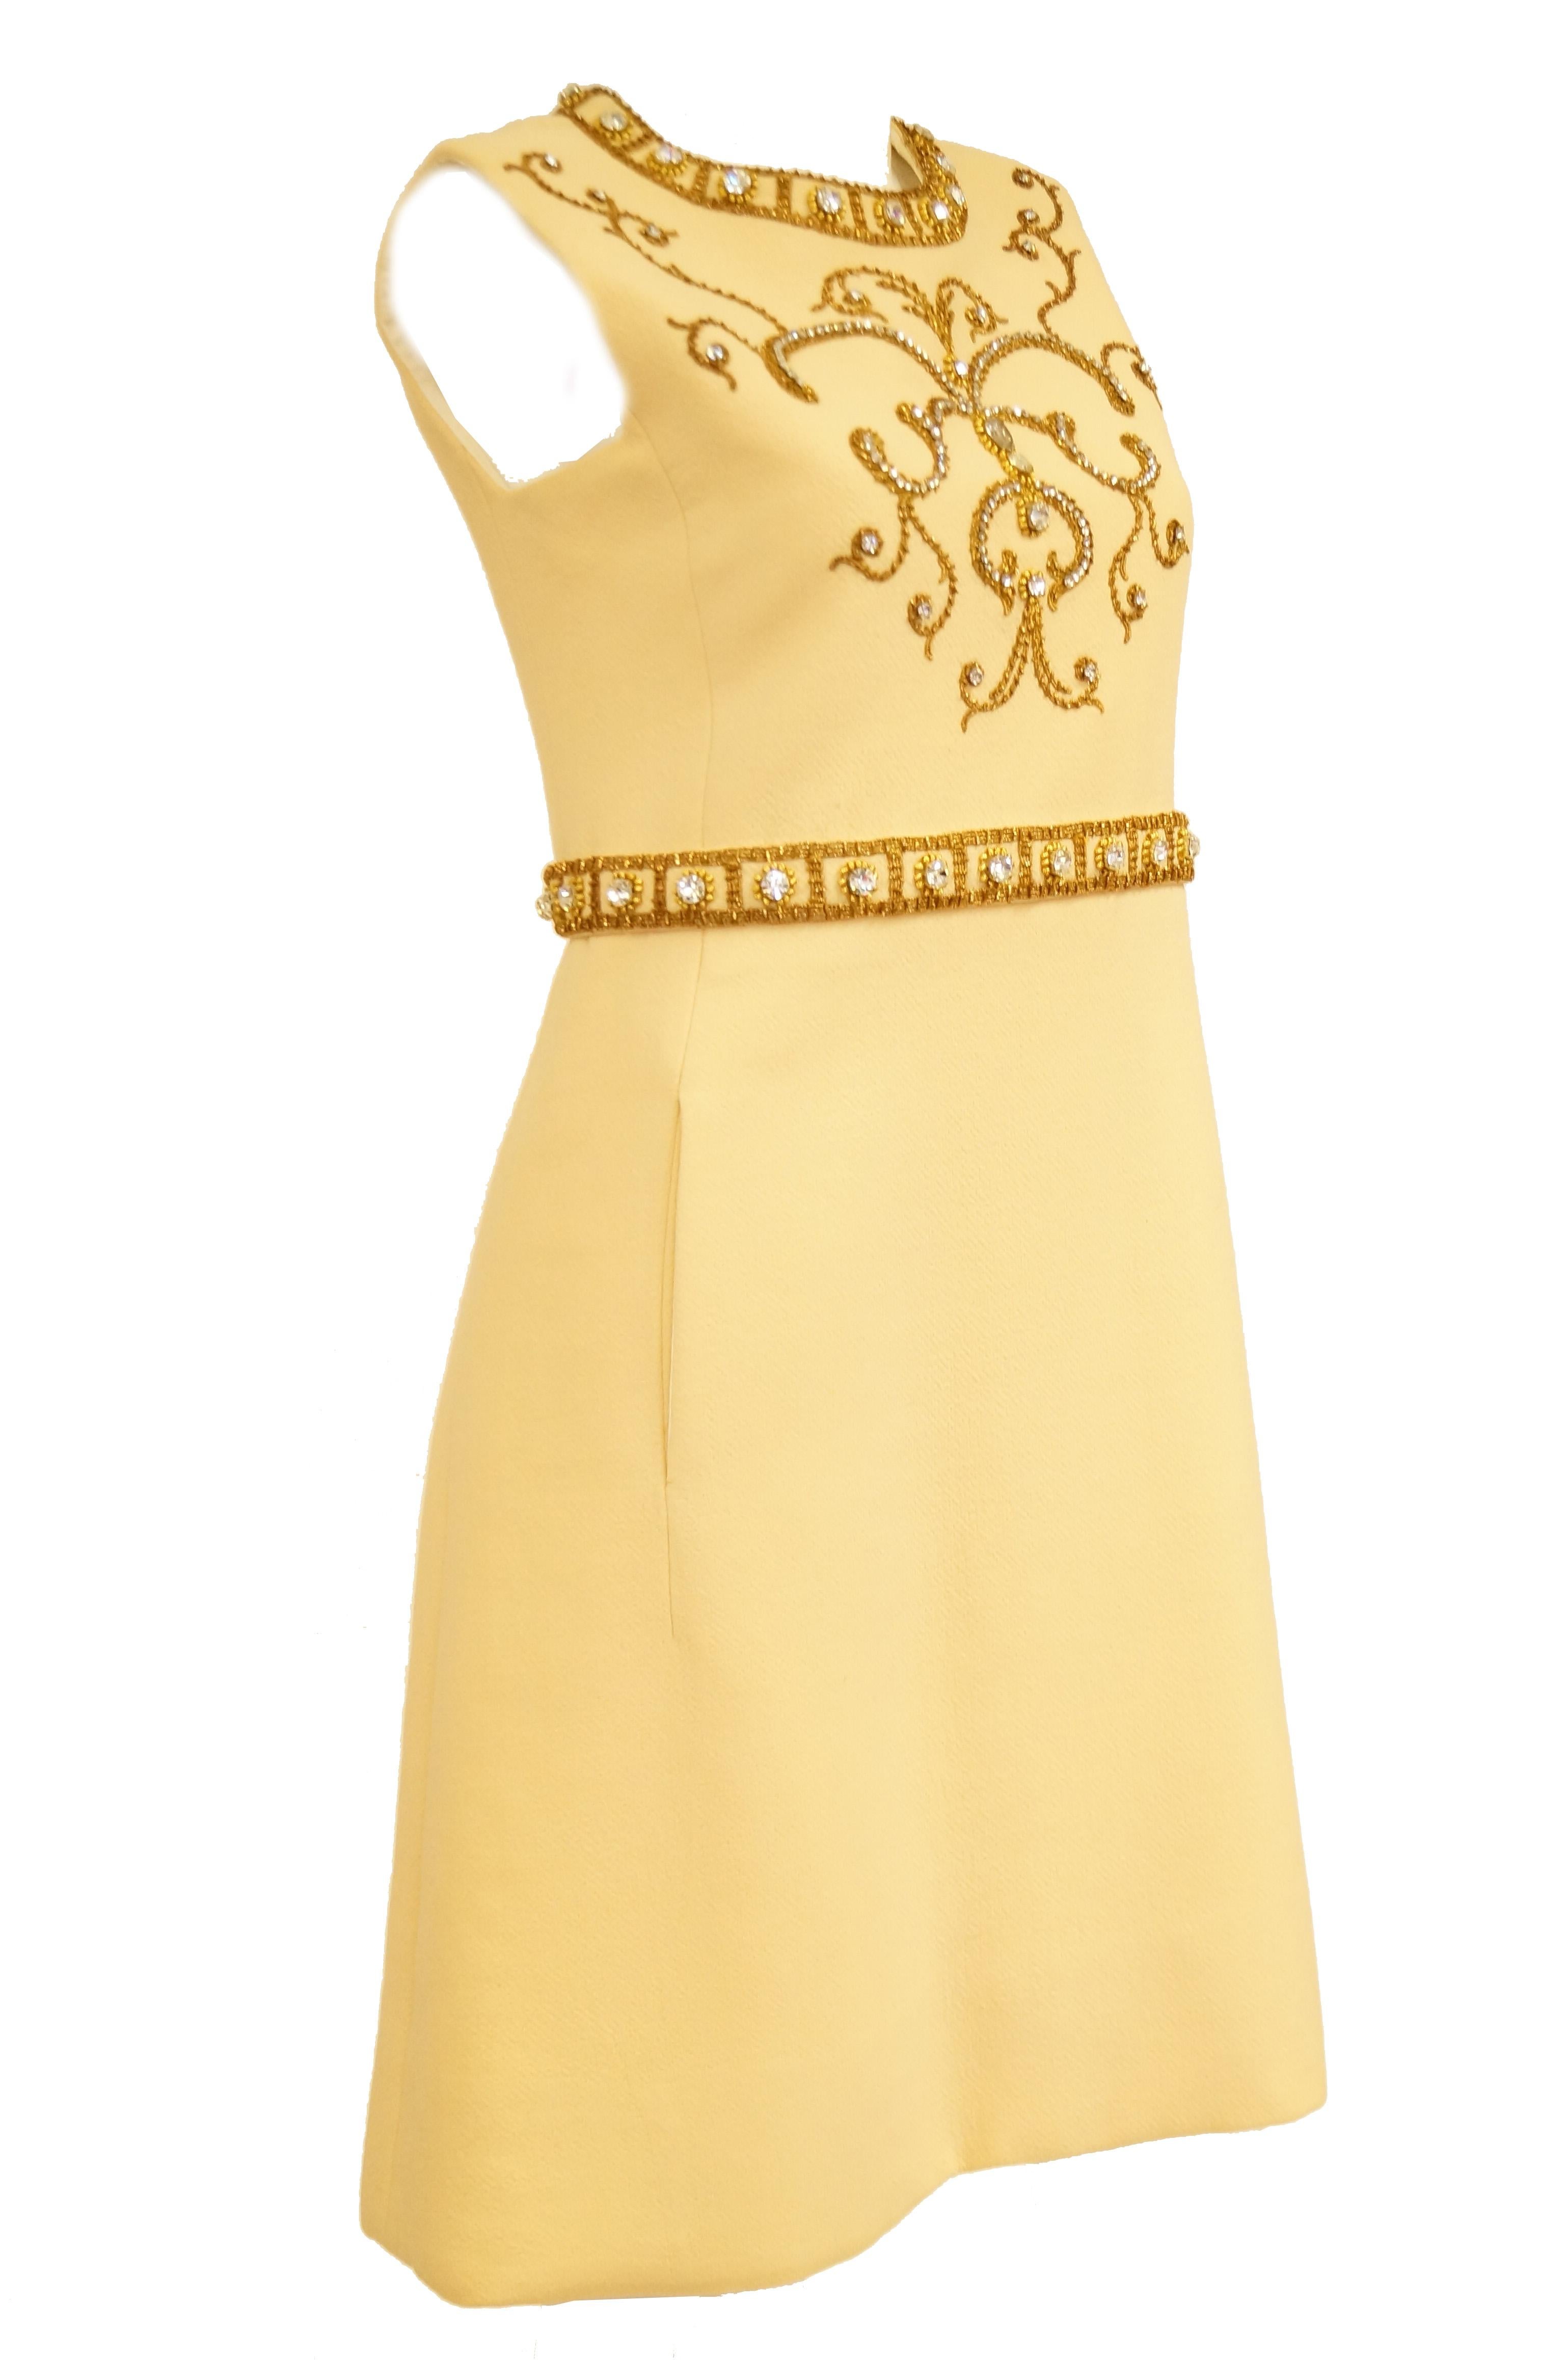 1960s Couture Cardinali Mod Shift Dress W/ Rhinestones & Gold Passementerie For Sale 3